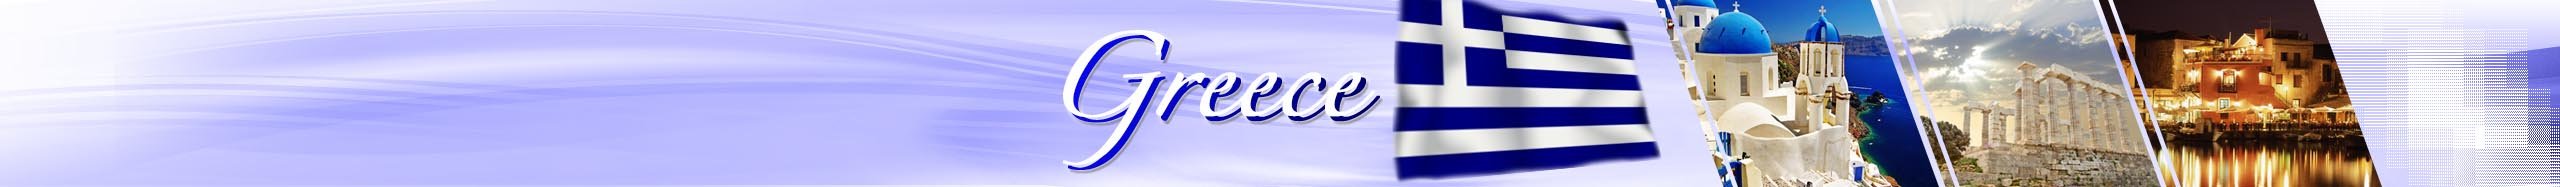 Greece Medical Tourism Image